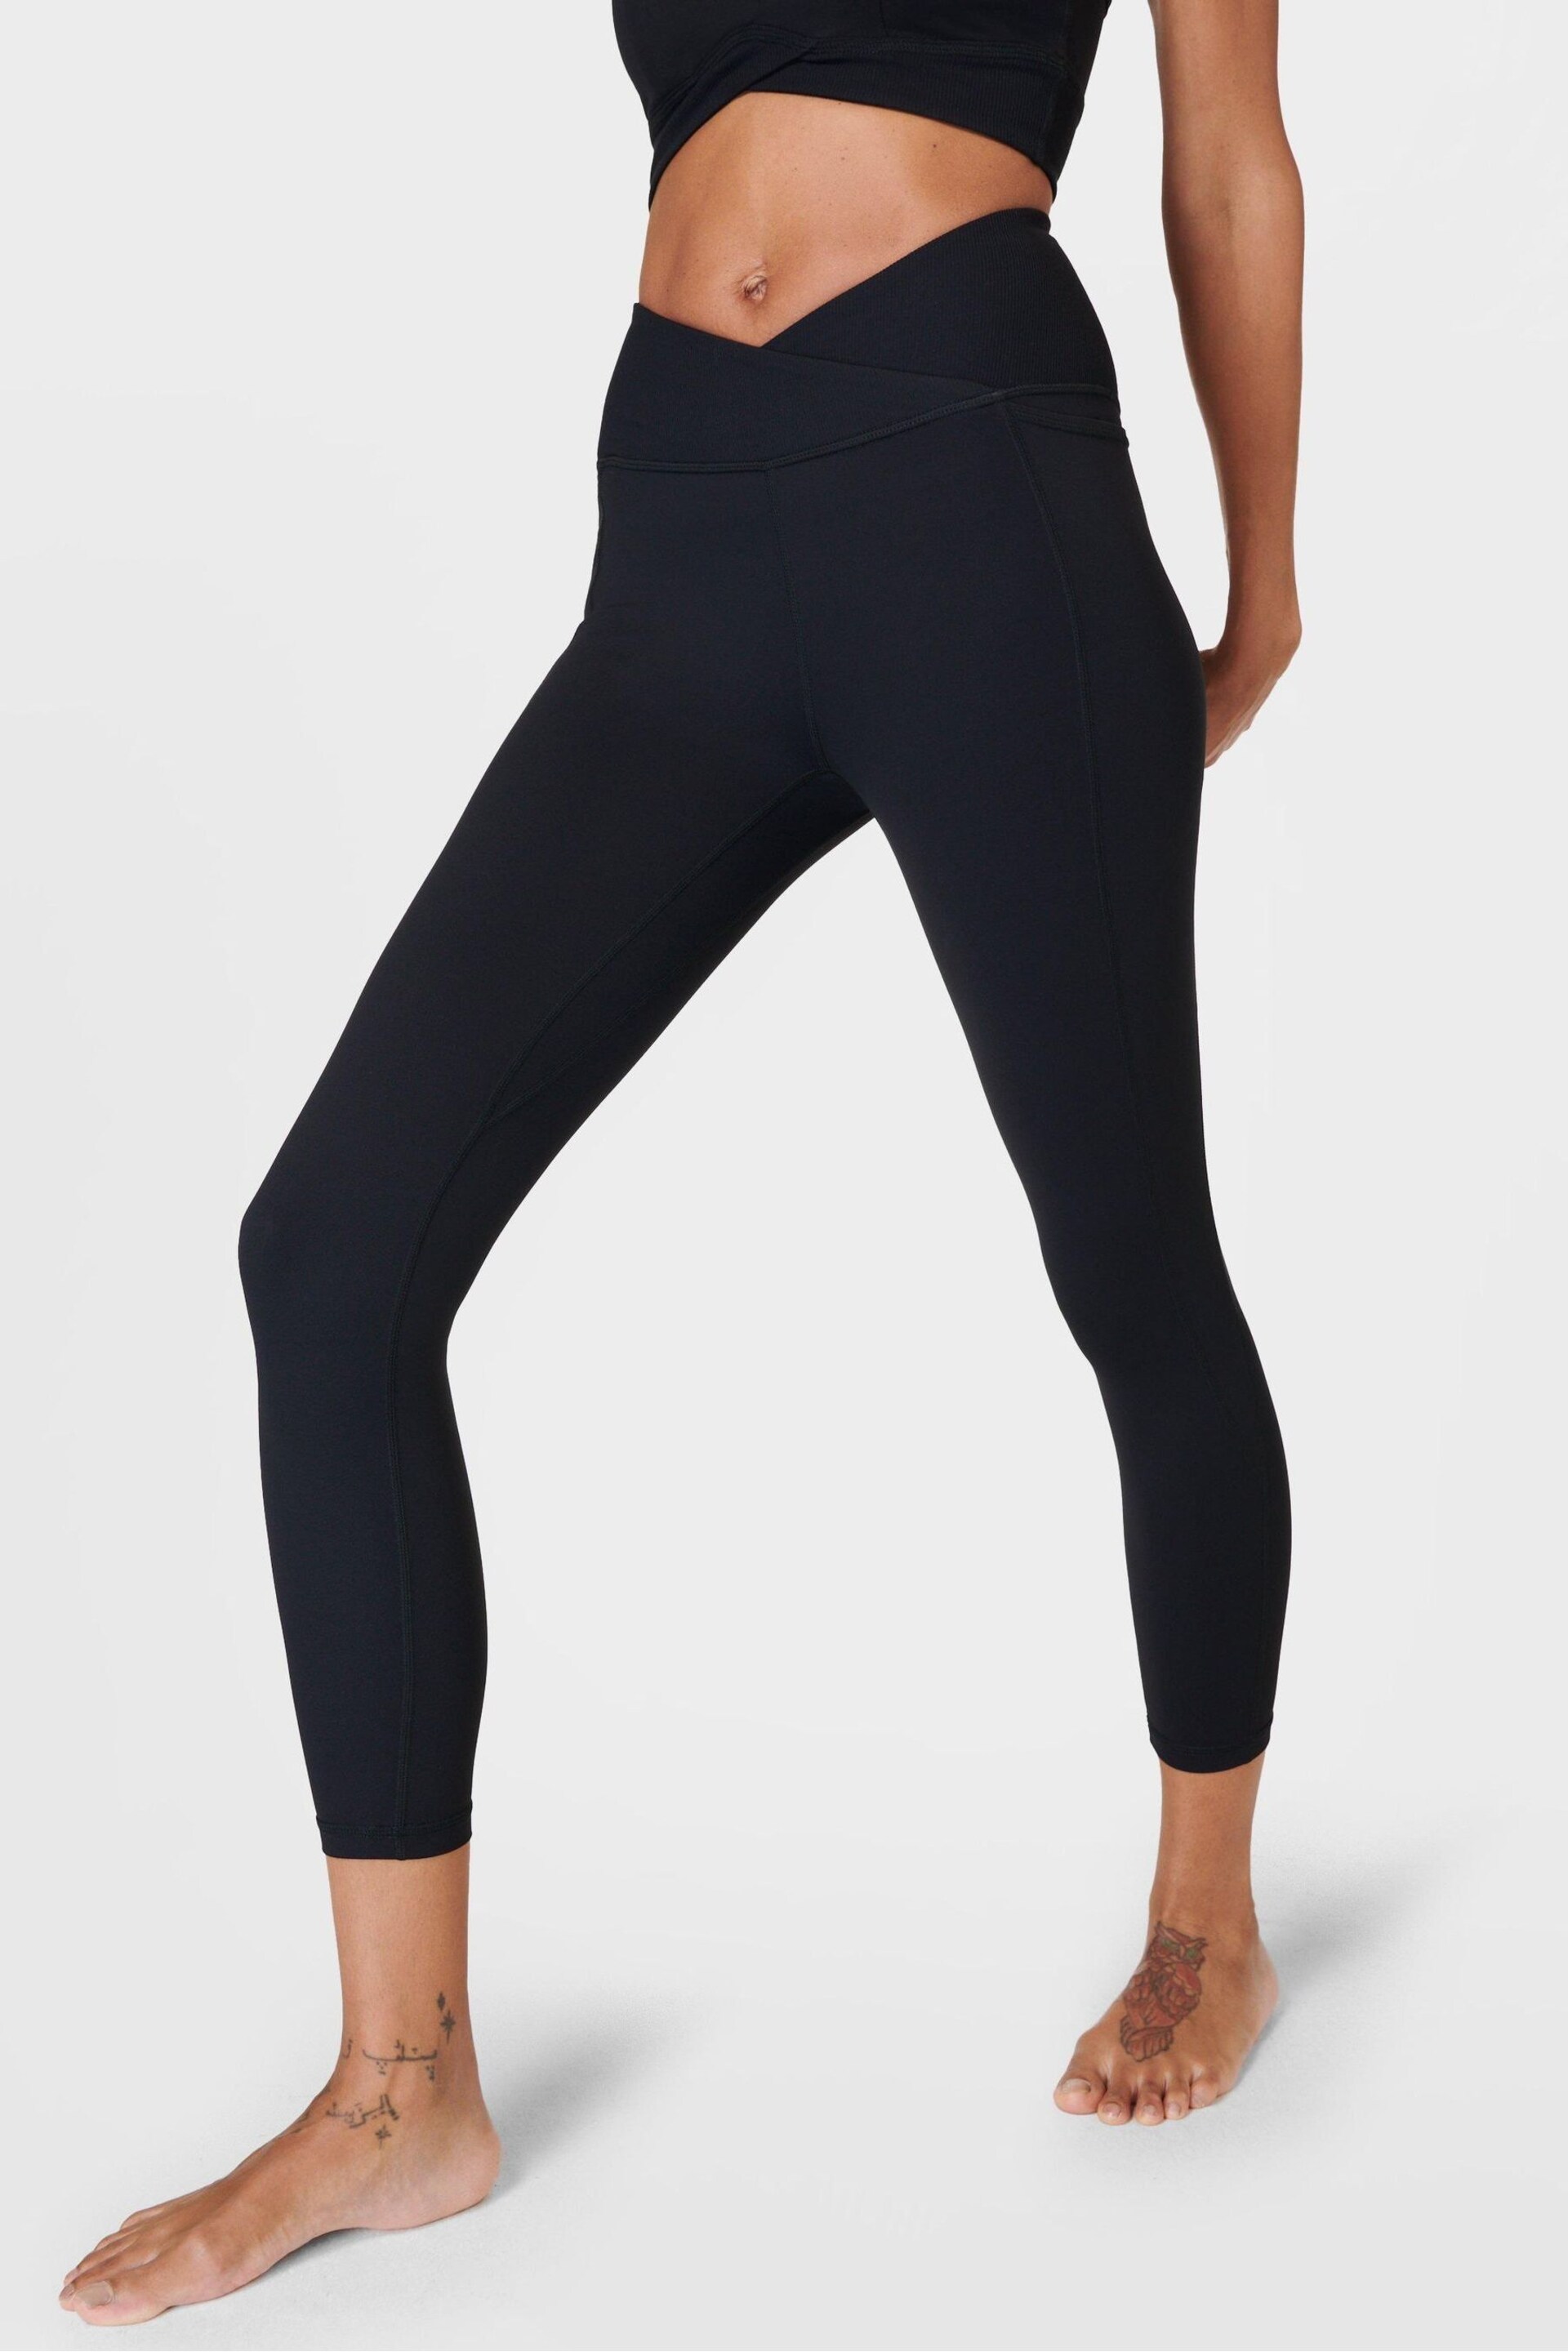 Sweaty Betty Black Super Soft Ultra-Lite 7/8 Wrap Yoga Leggings - Image 7 of 7